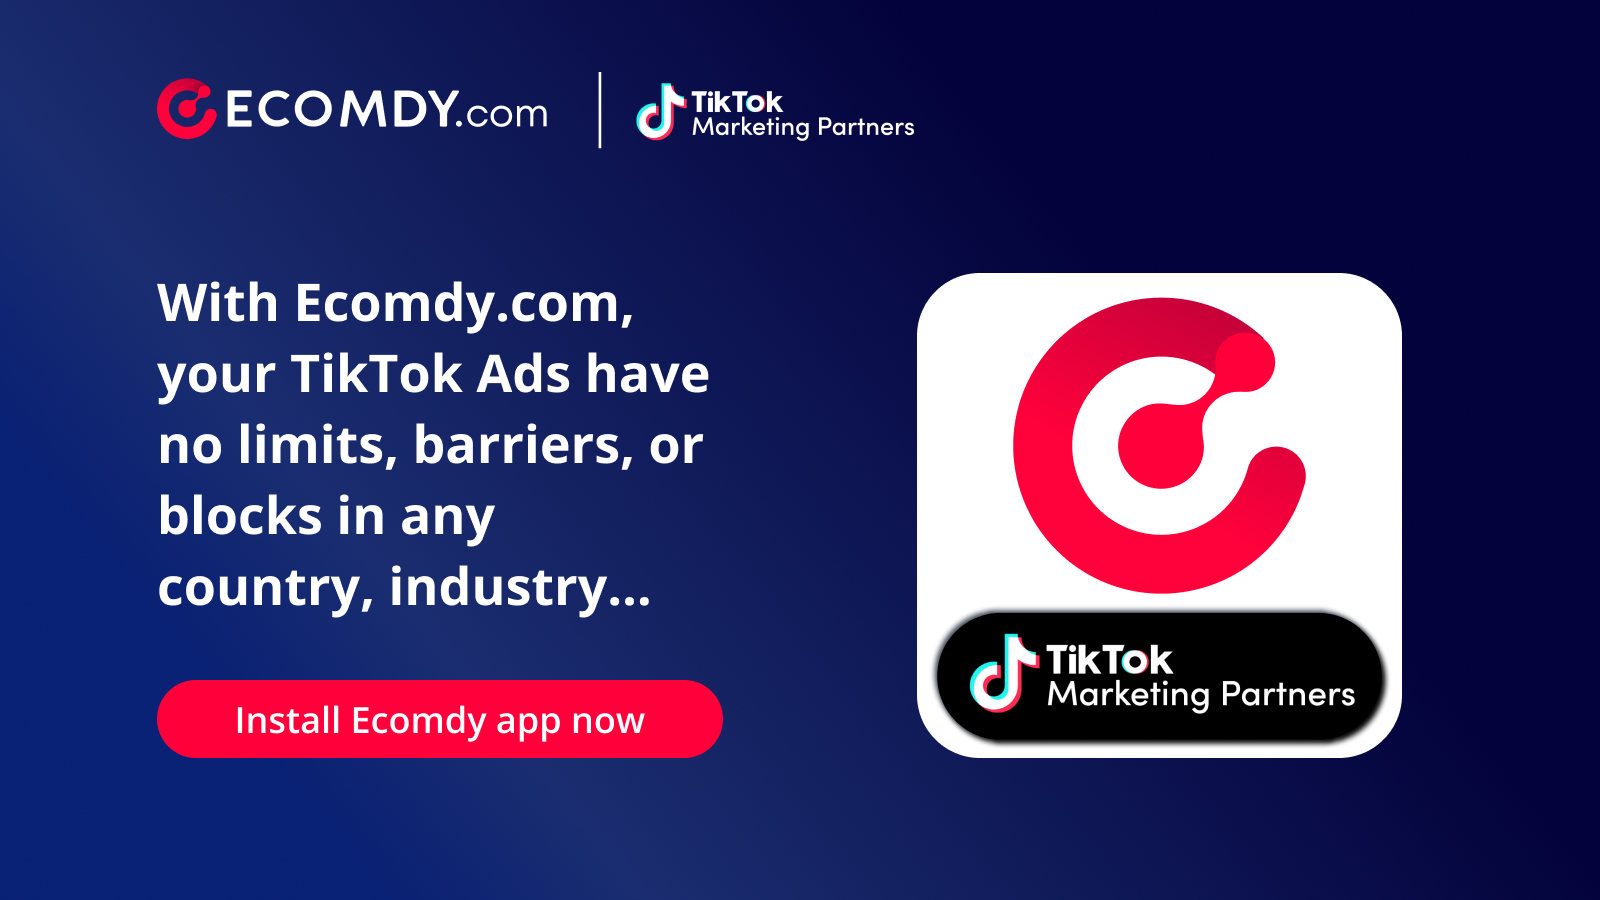 Ecomdy.com - Officiële TikTok Marketing Partner